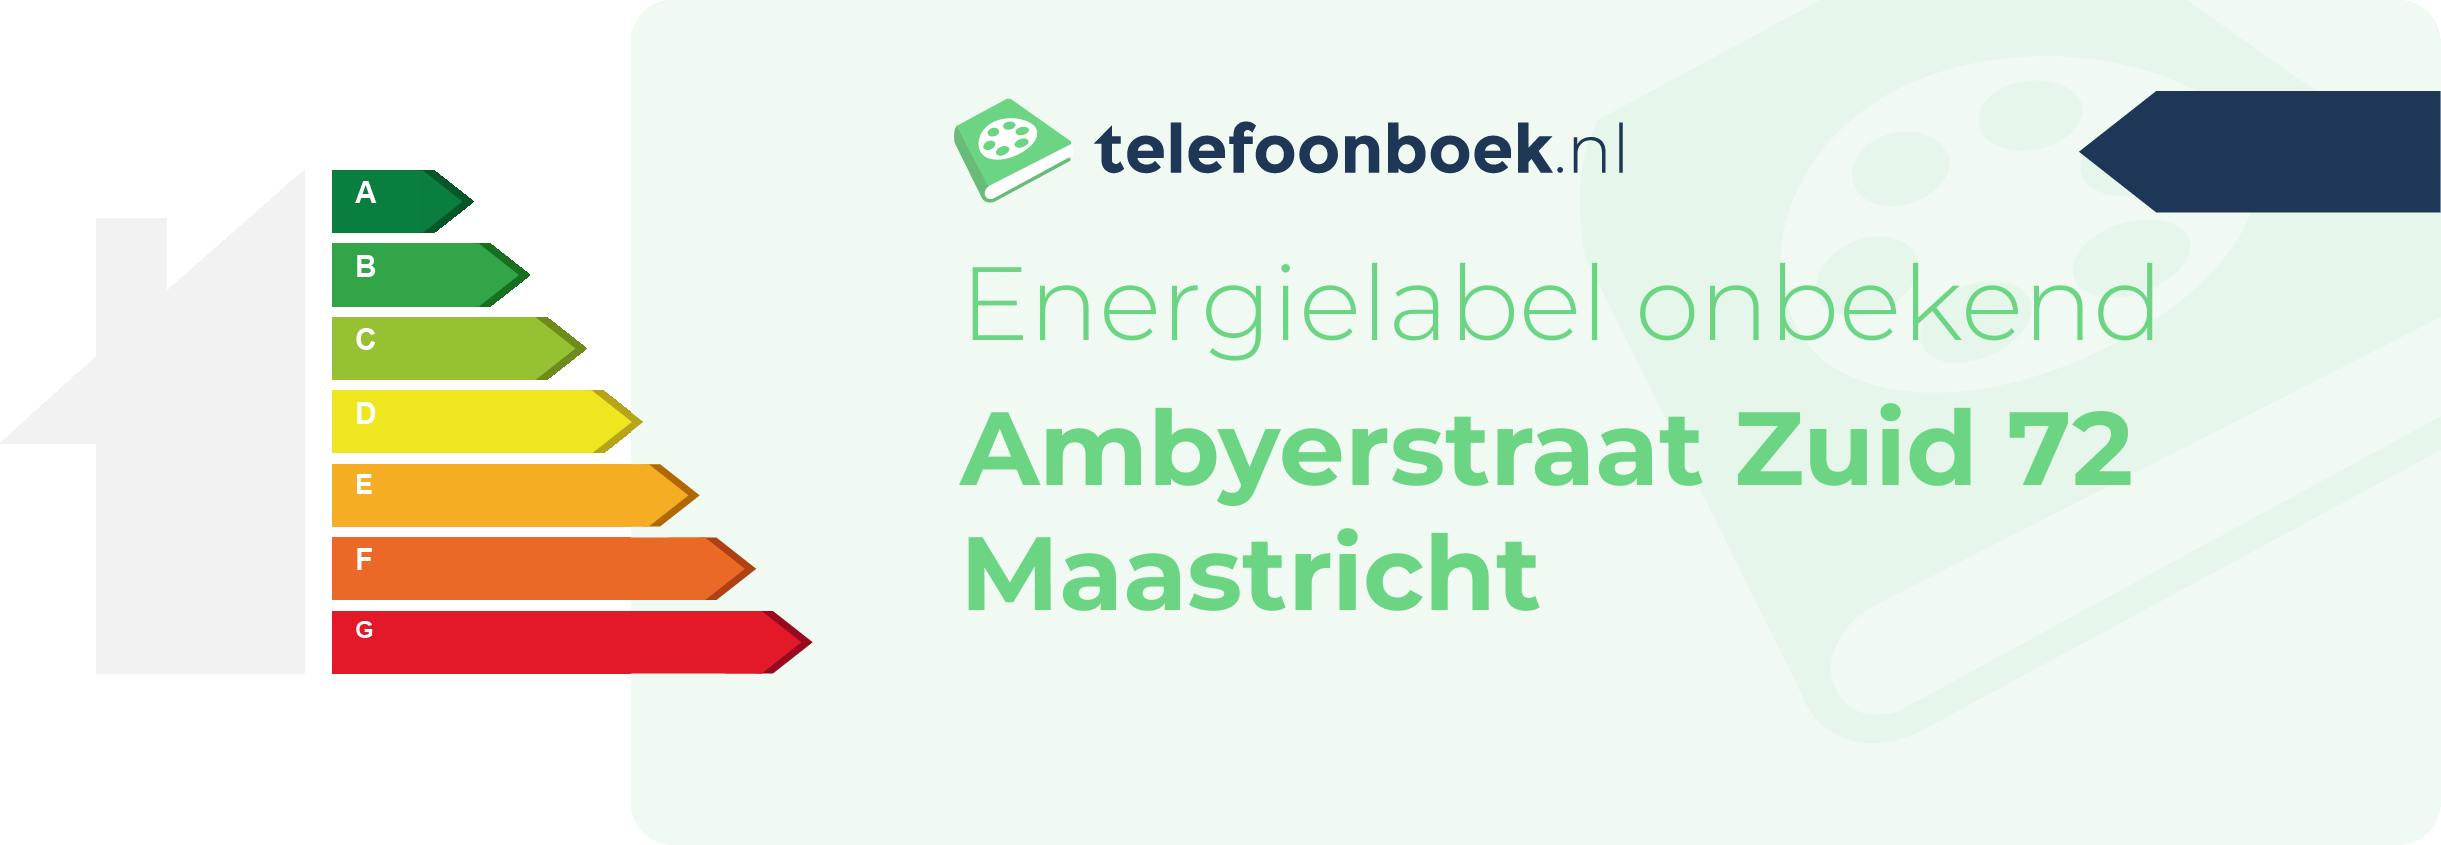 Energielabel Ambyerstraat Zuid 72 Maastricht